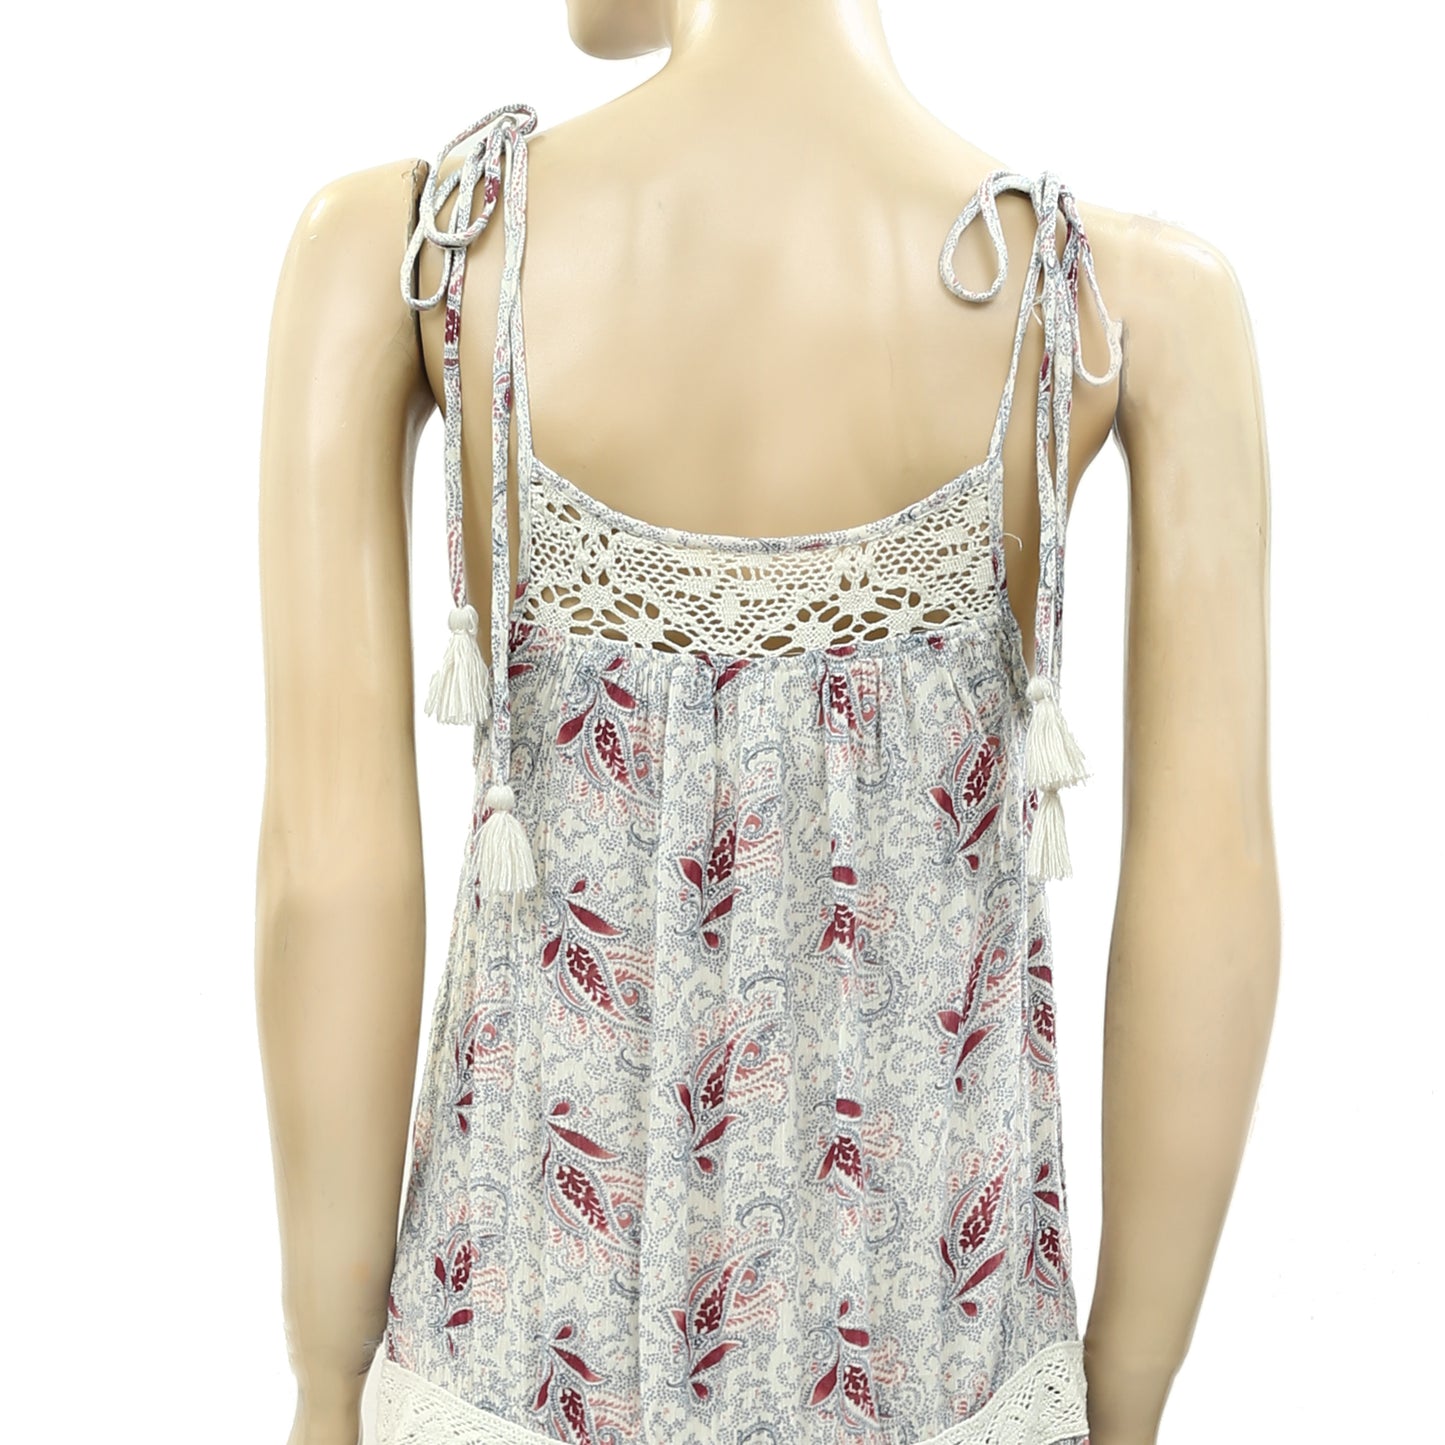 Denim & Supply Ralph Lauren Floral Printed Maxi Dress